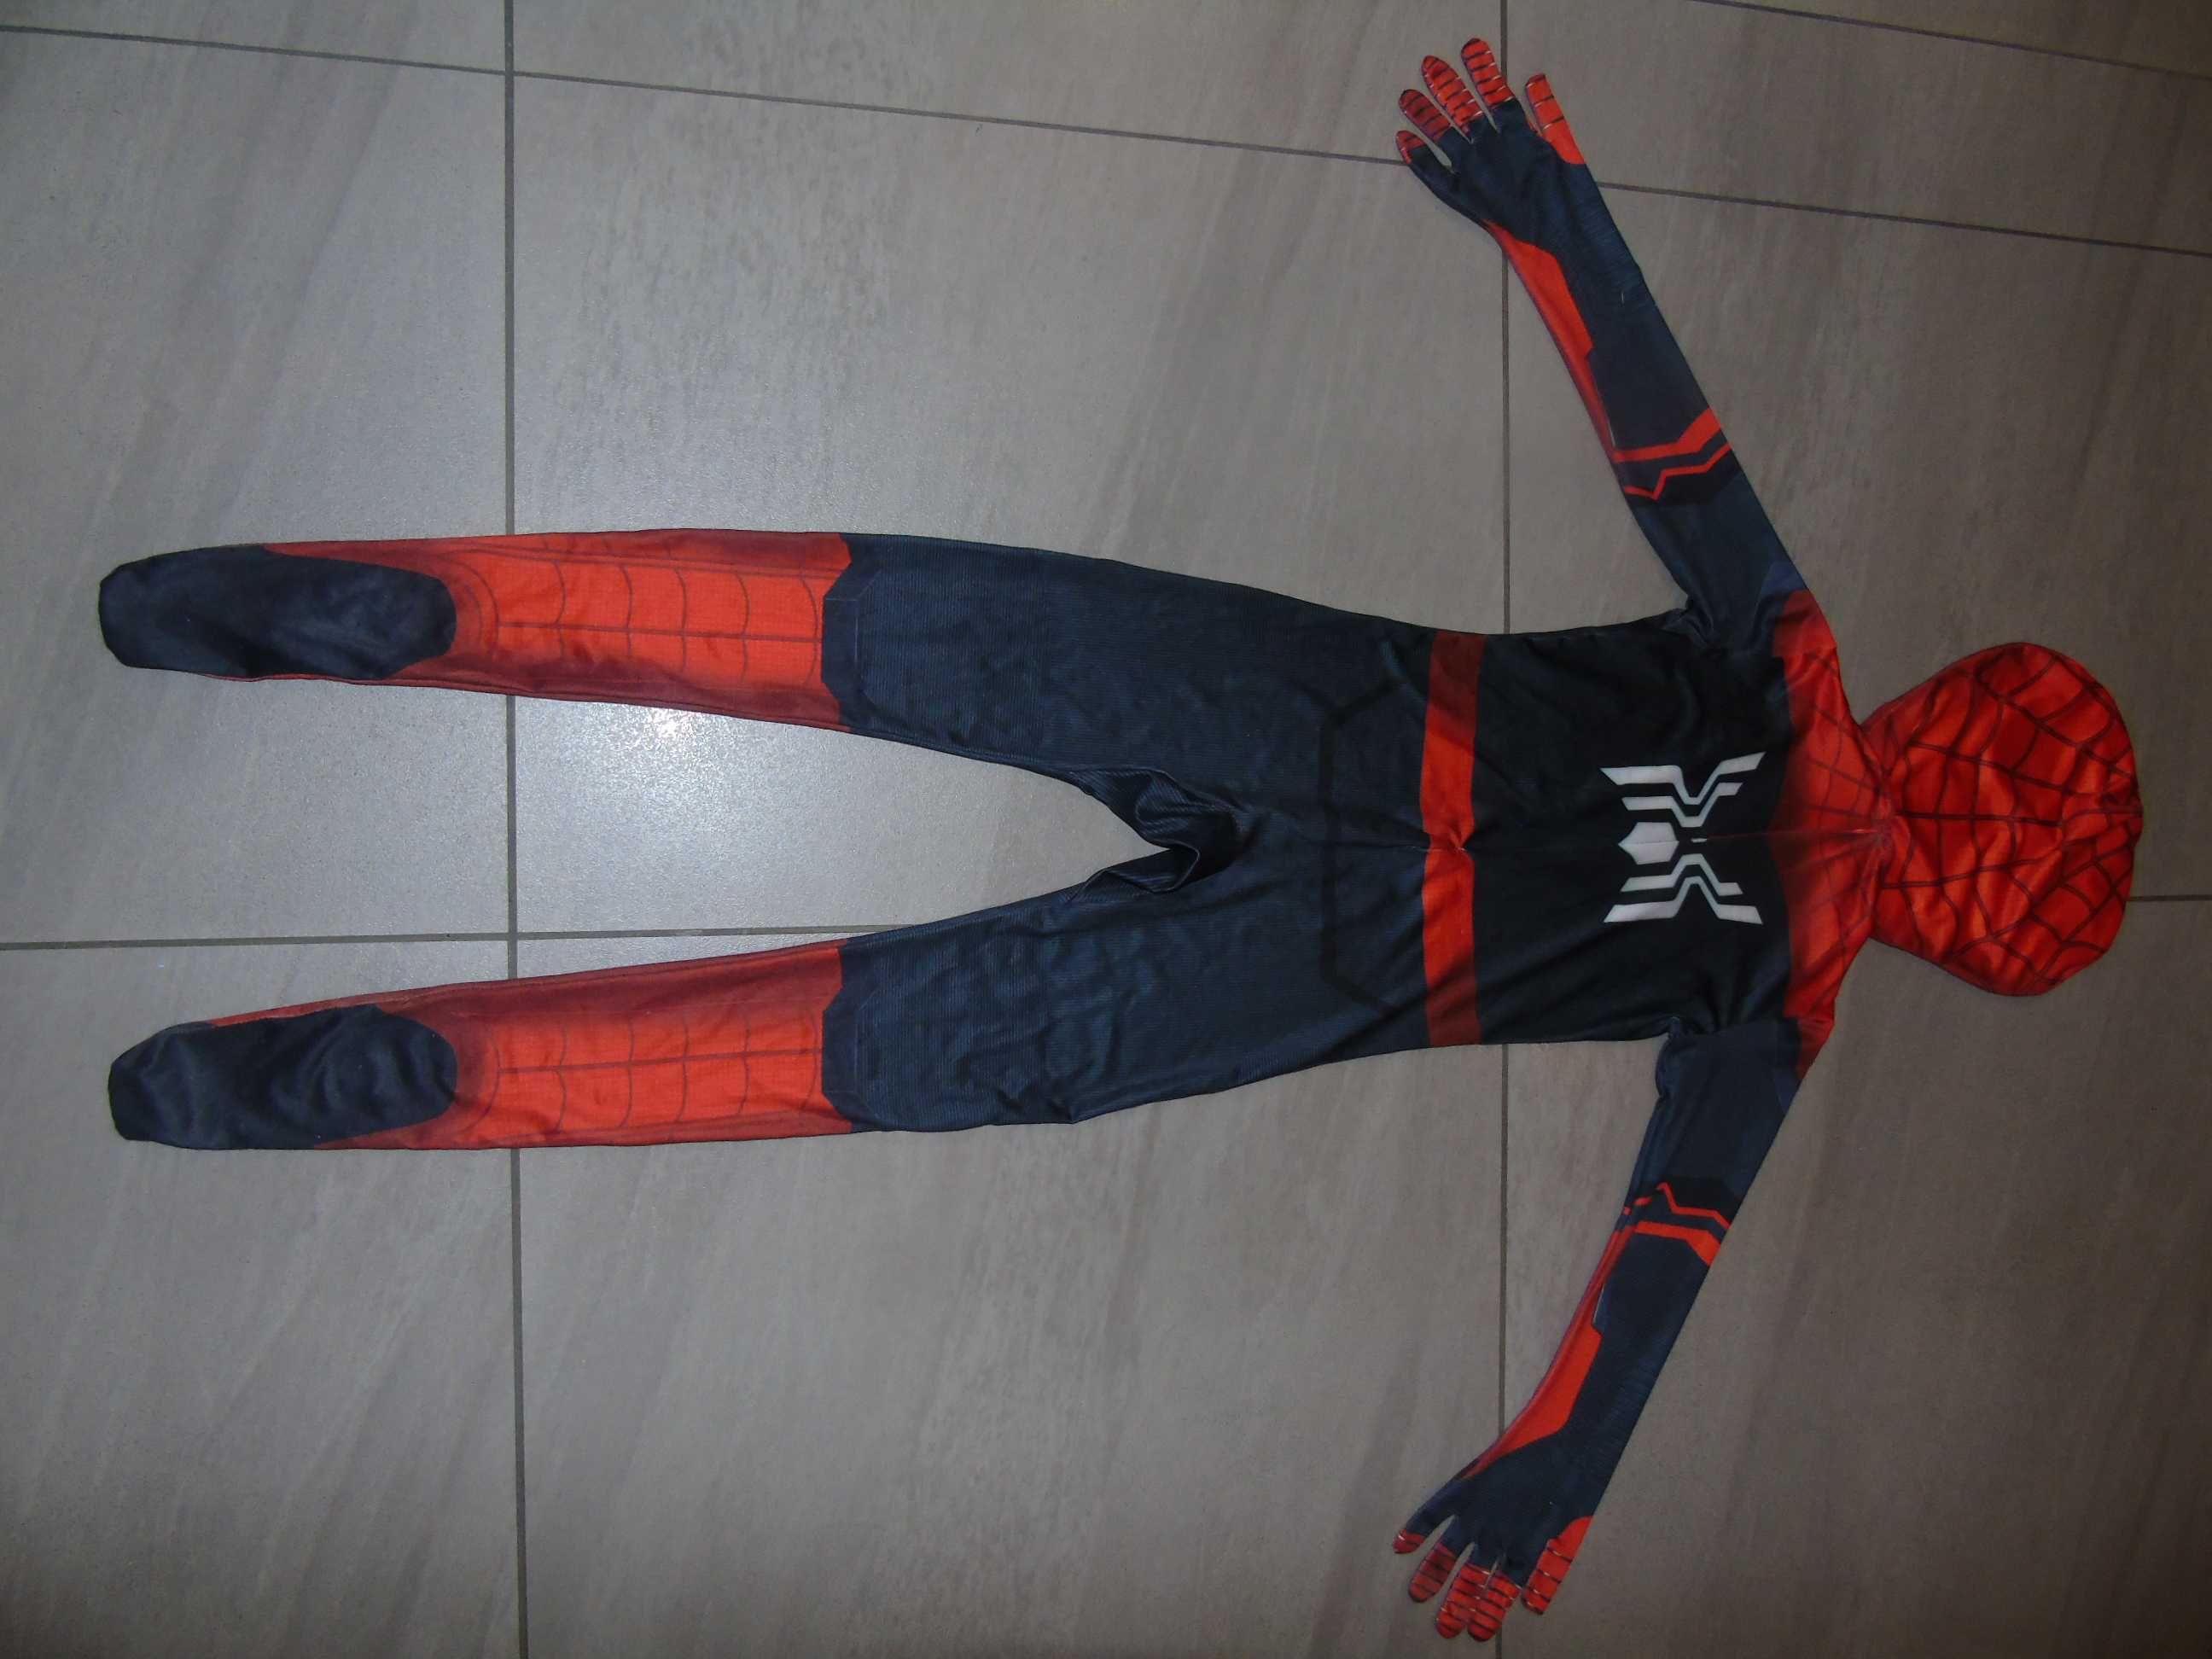 strój Spider-Man 5 lat